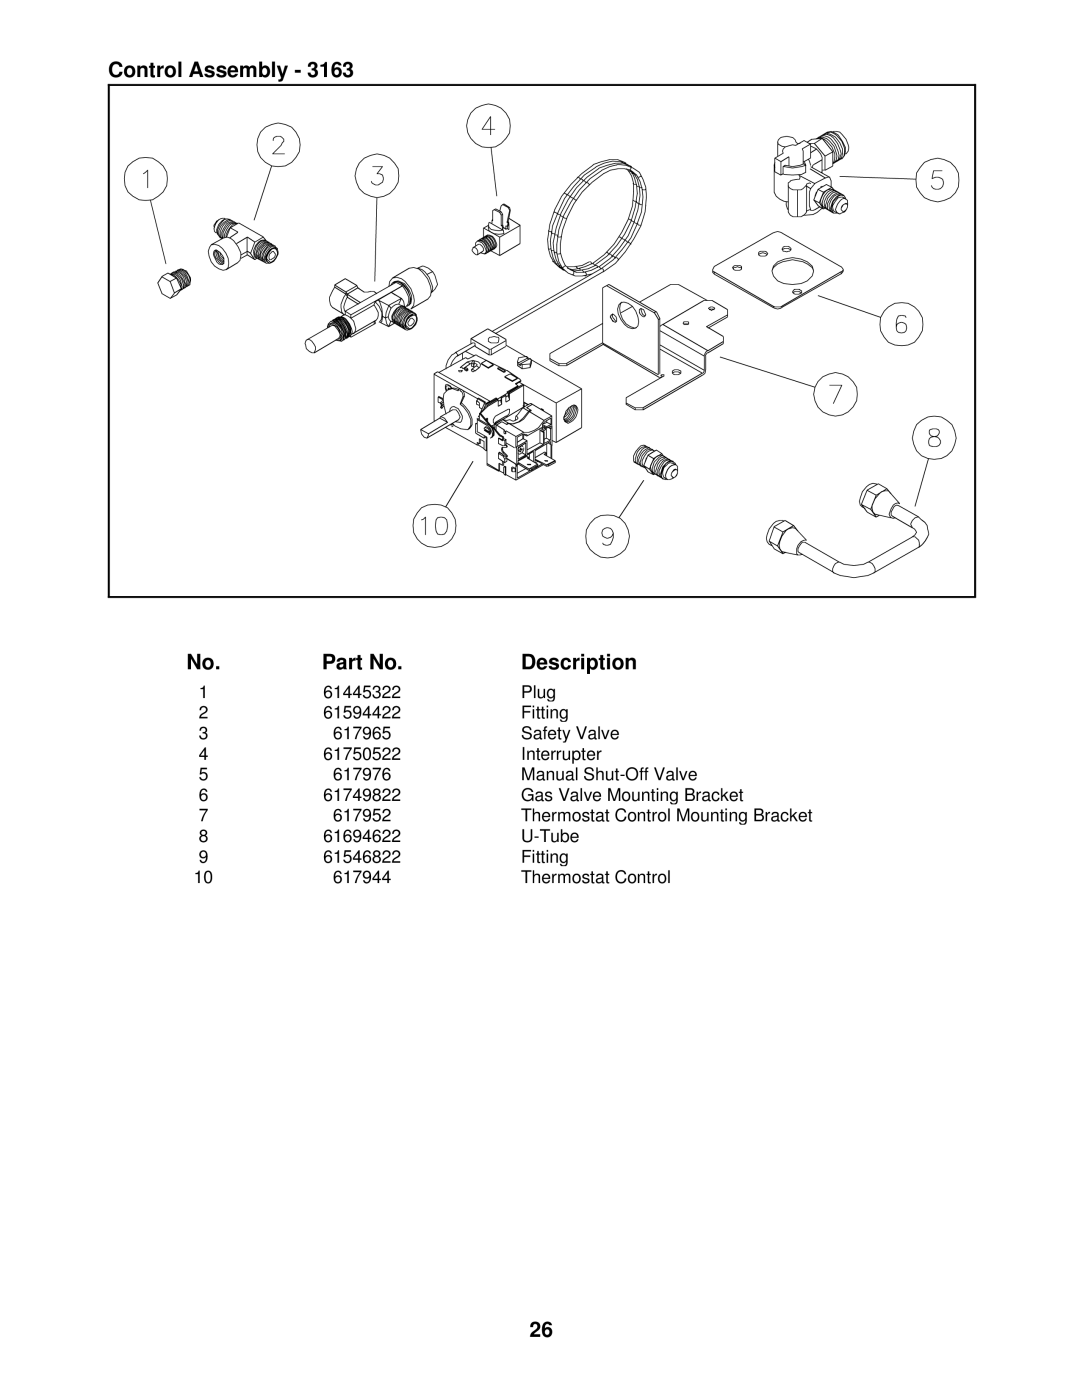 Bryant 3163 service manual Control Assembly, Description 